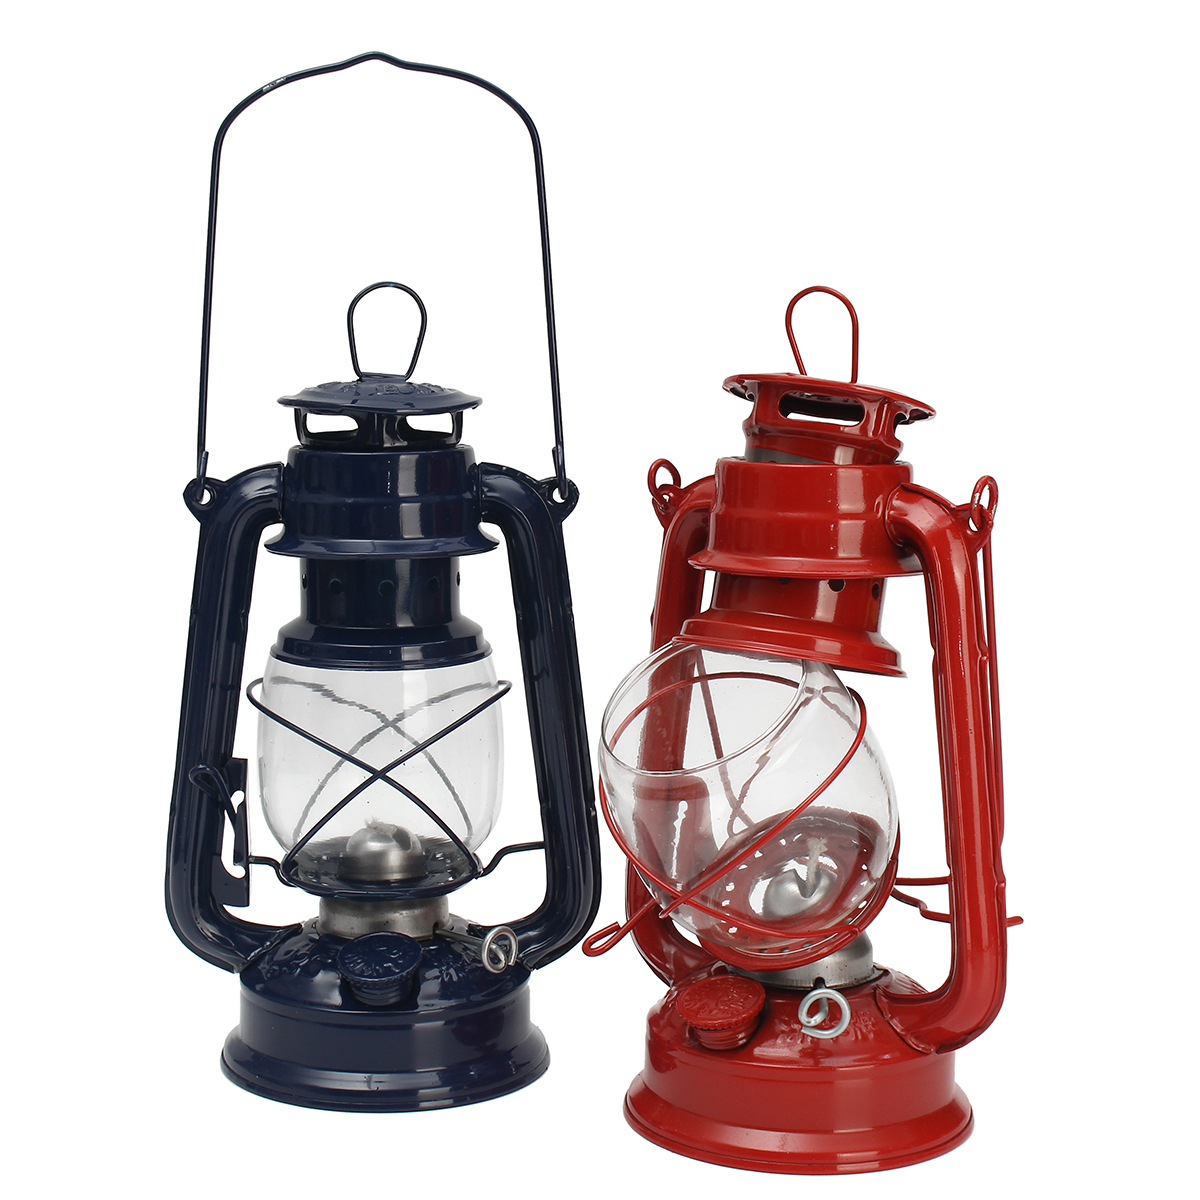 Vintage-Oil-Lamp-Lantern-Kerosene-Paraffin-Hurricane-Lamp-Light-Outdoor-Camping-1345072-3